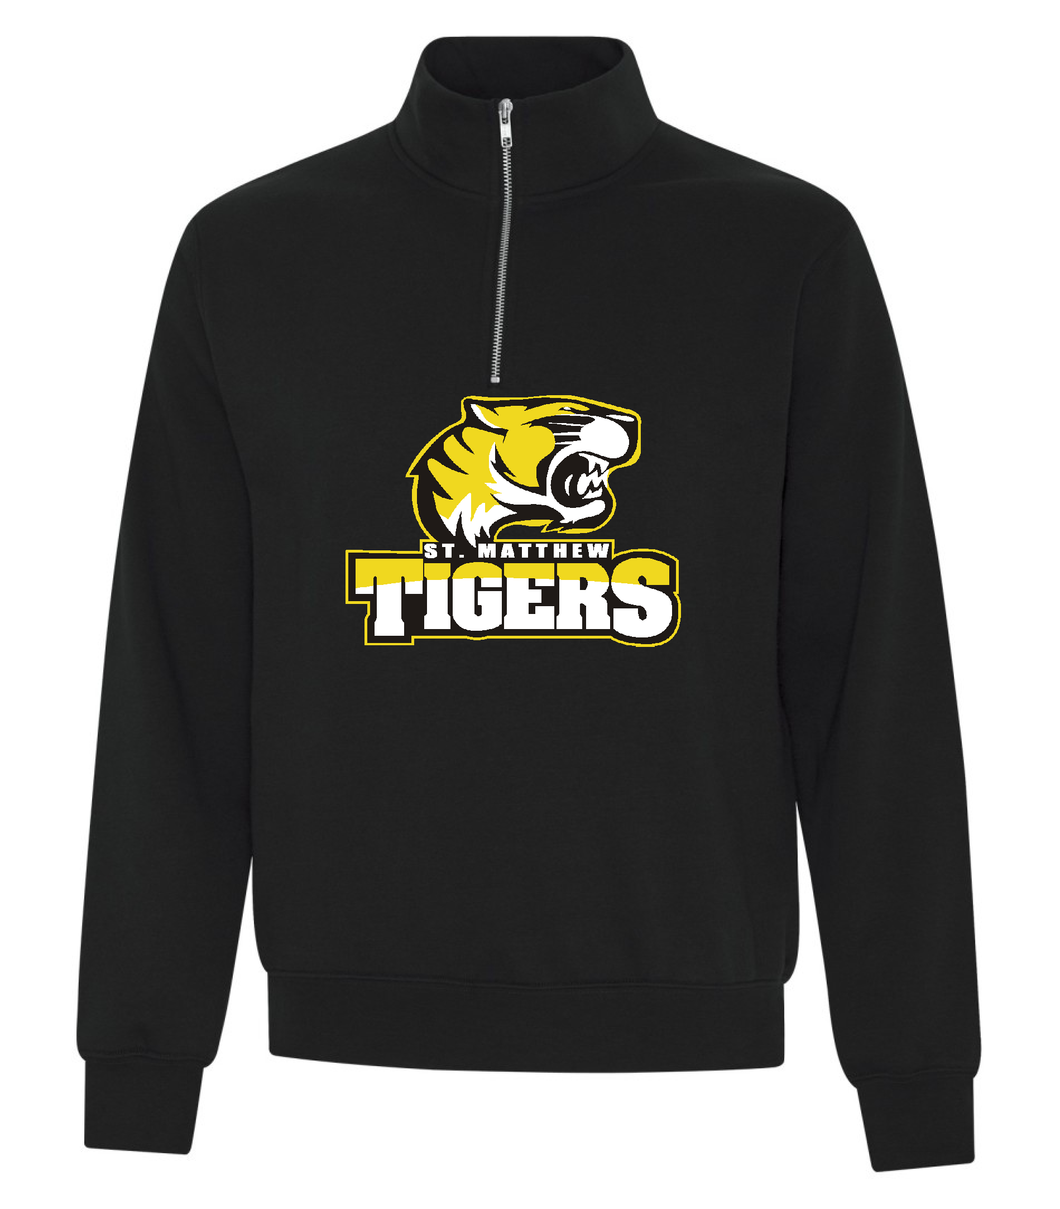 Adult Quarter Zip Sweater - St. Matthew High School (Tiger Front Logo)